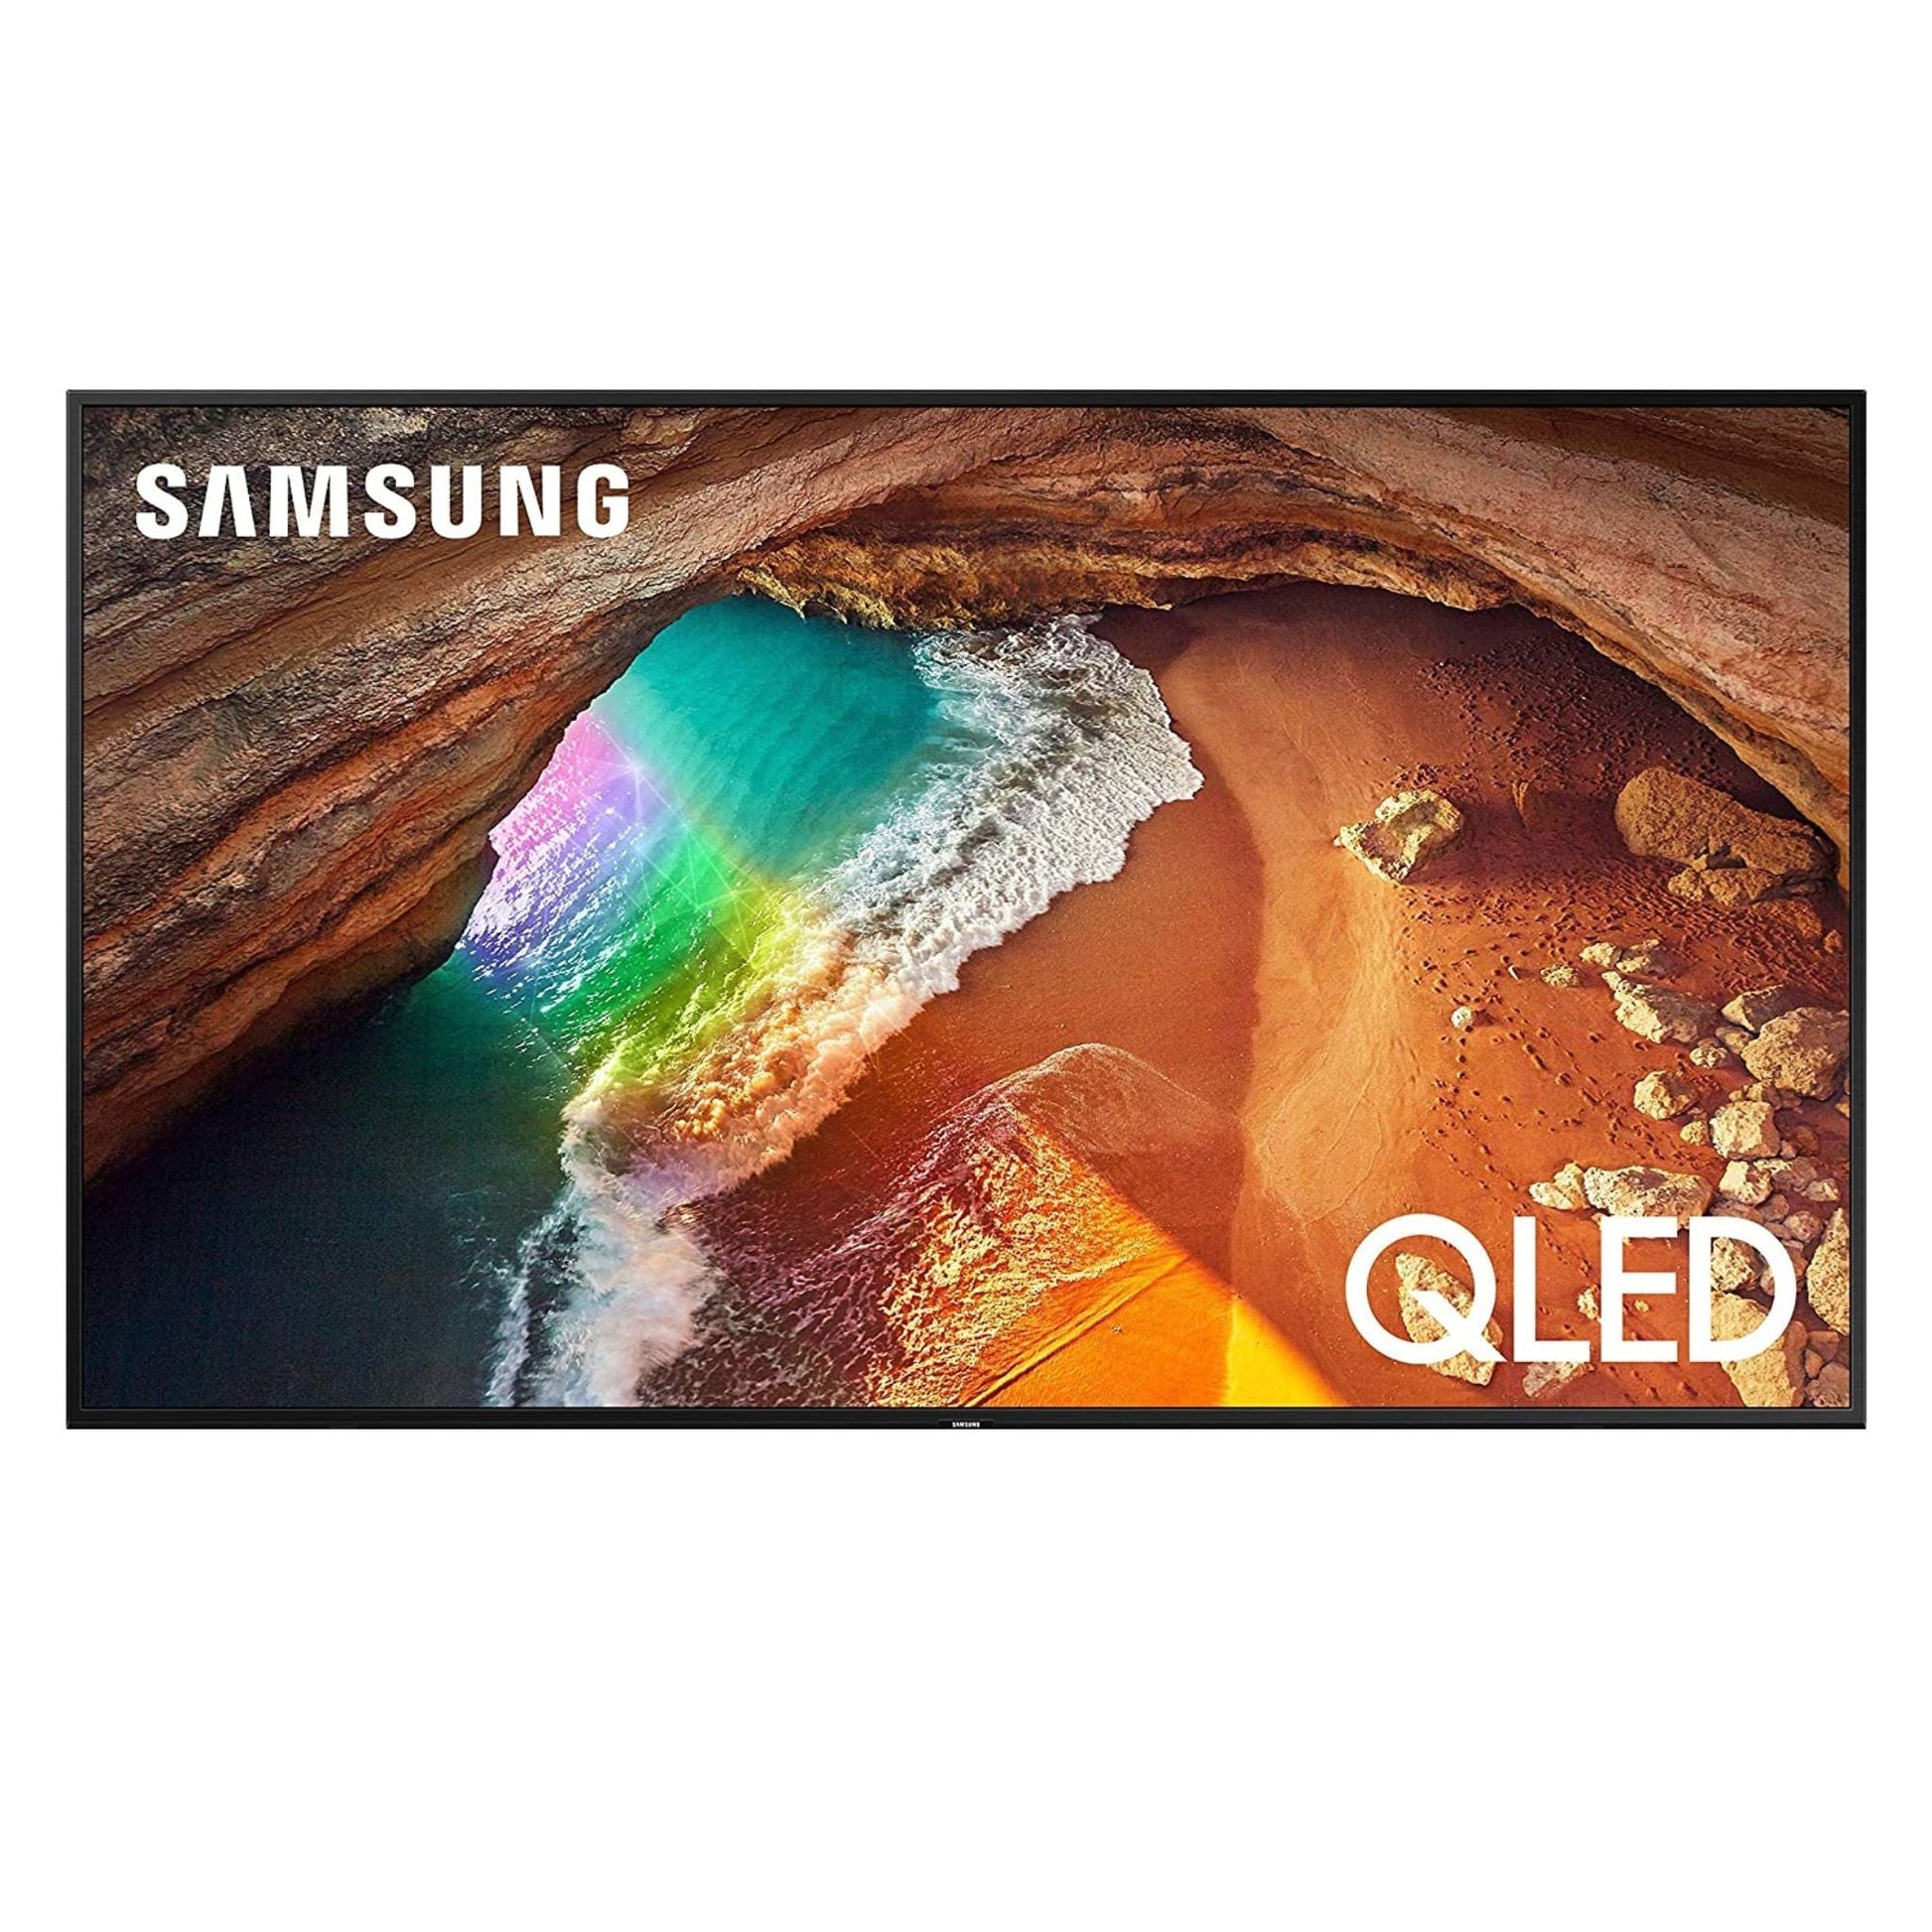 Samsung 82 inch Smart QLED TV, 82Q70R